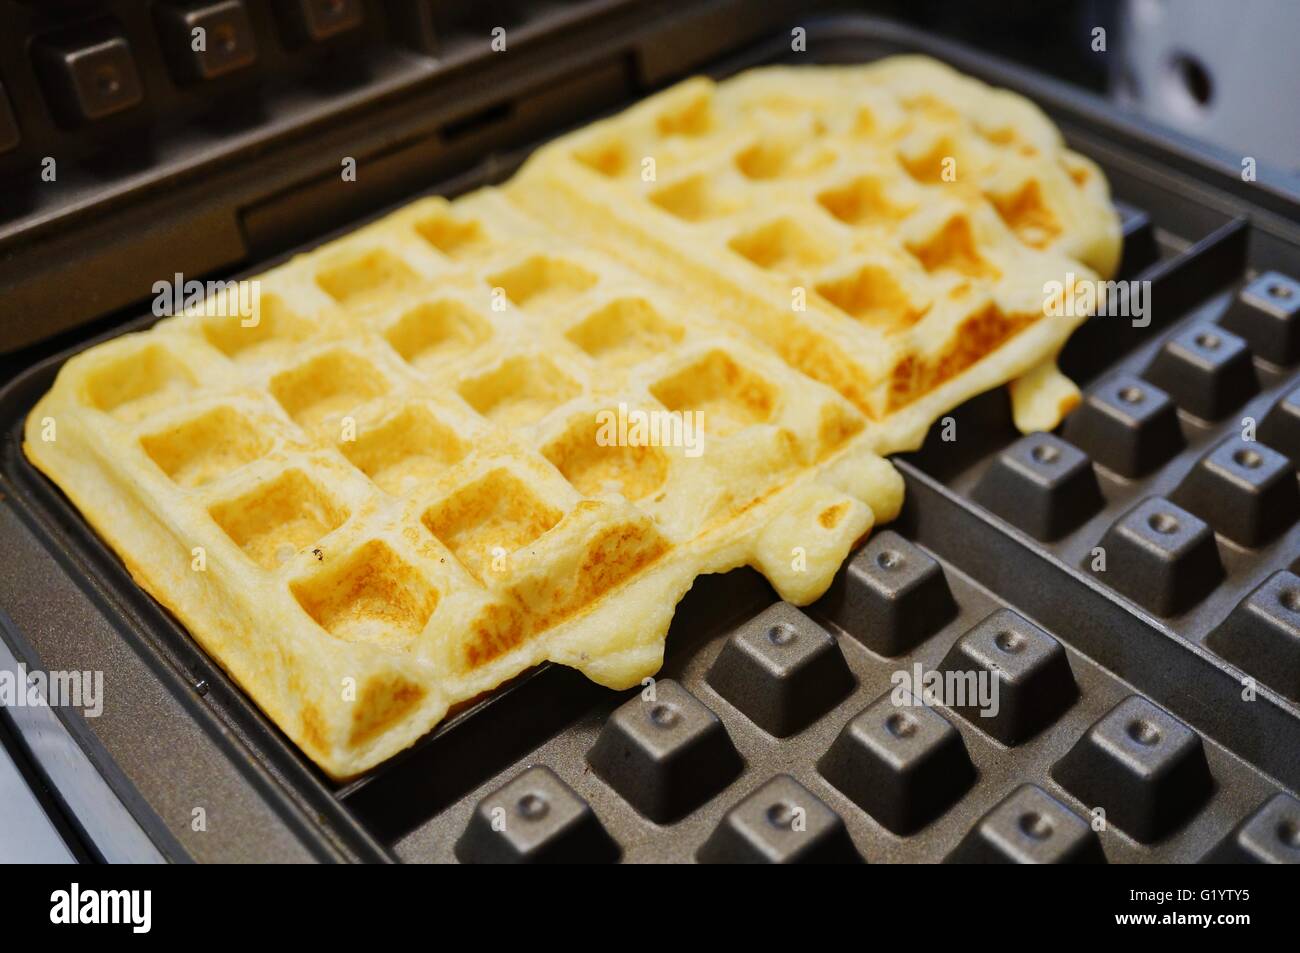 https://c8.alamy.com/comp/G1YTY5/baking-fresh-waffles-in-the-waffle-maker-G1YTY5.jpg